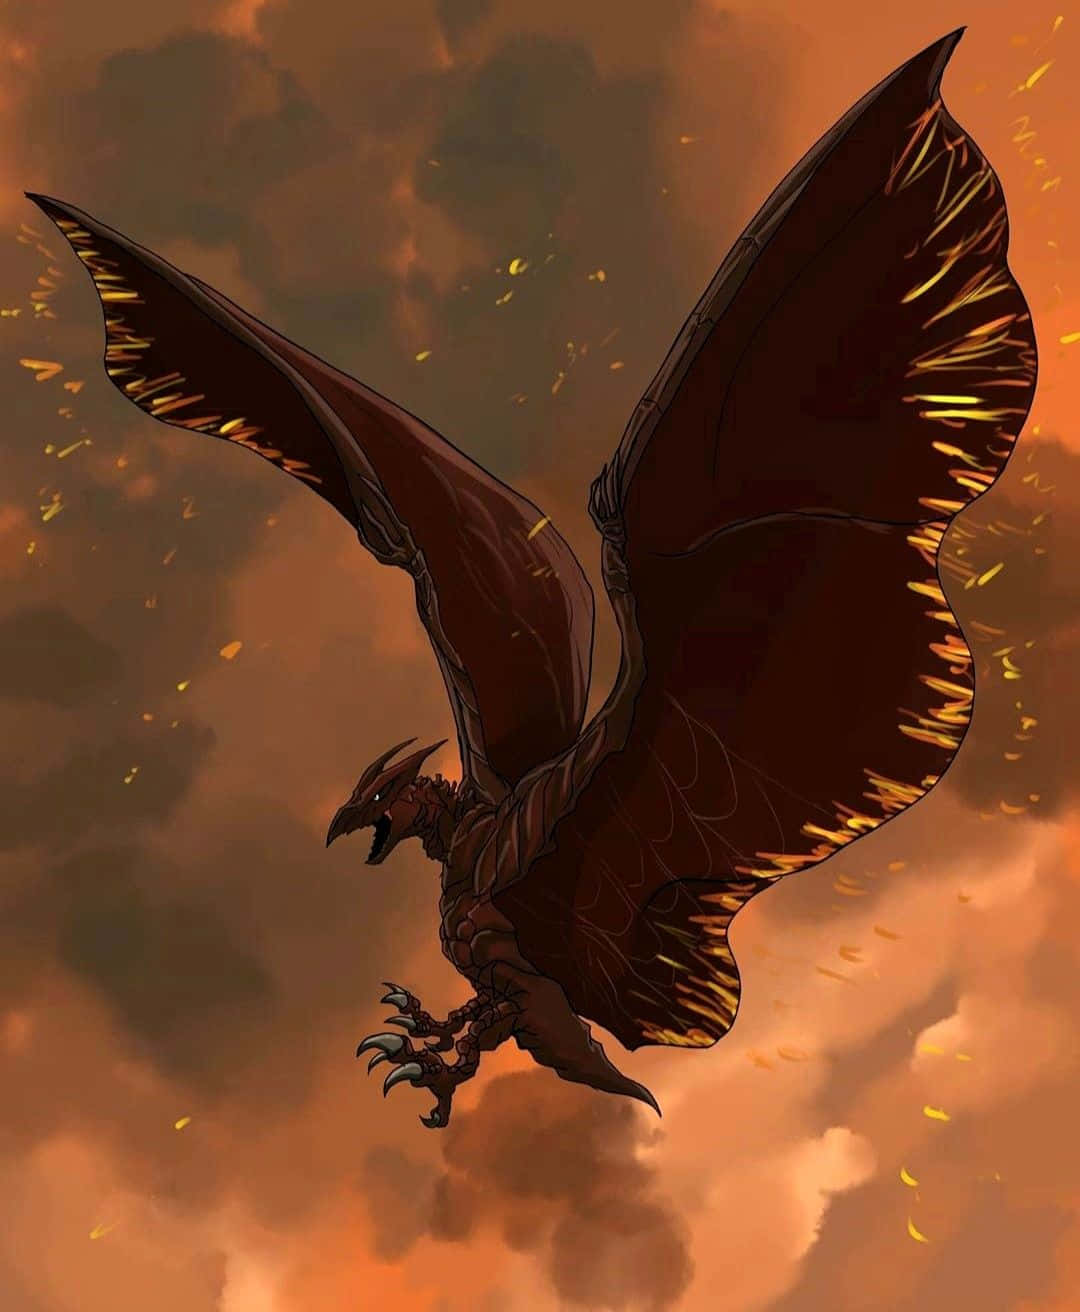 A Rodan, An Impressive And Imposing Bird-like Kaiju From The Toho Kaiju Universe, Soars Across The Sky Above.